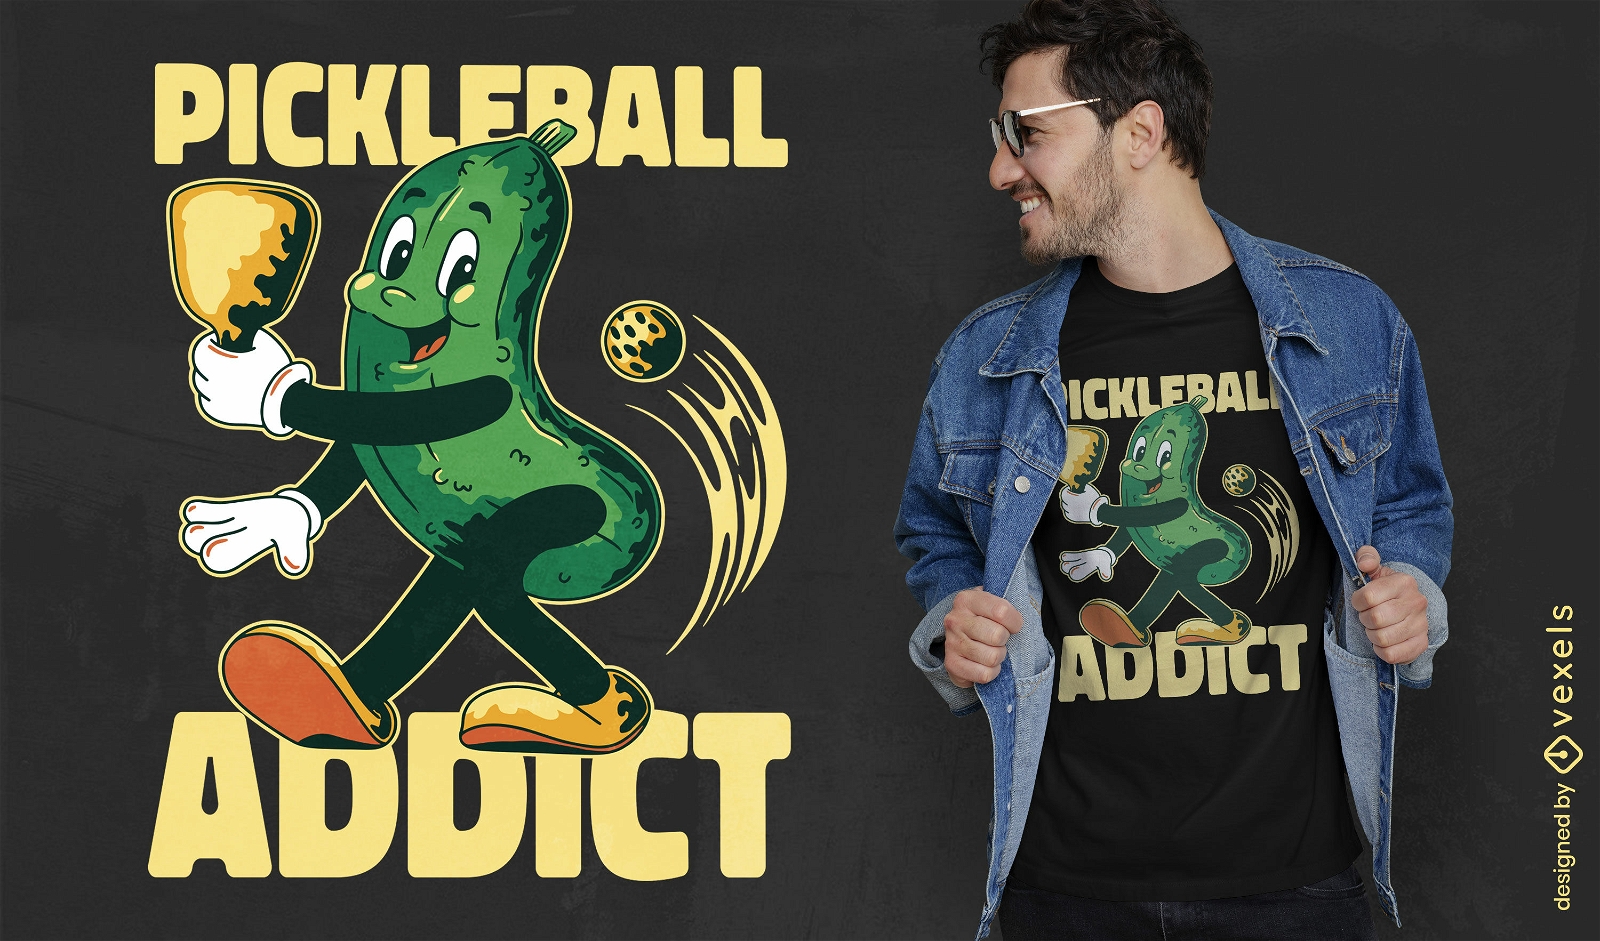 Pickleball addict t-shirt design